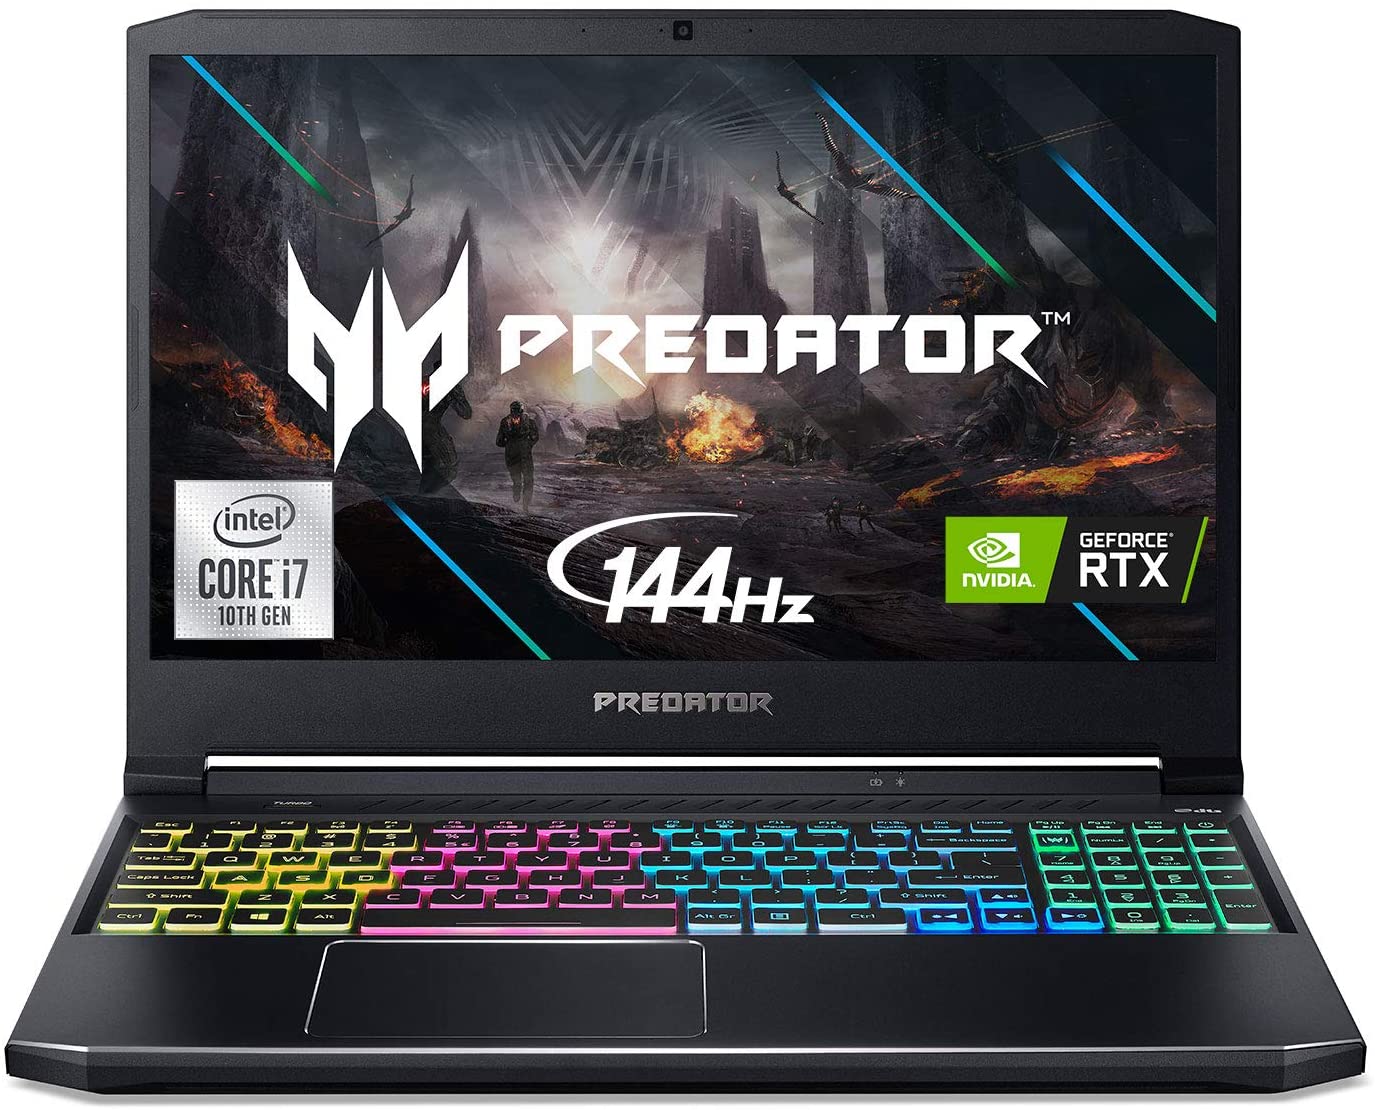 Acer Predator Helios 300 NVIDIA GeForce RTX 2060 6GB Laptop